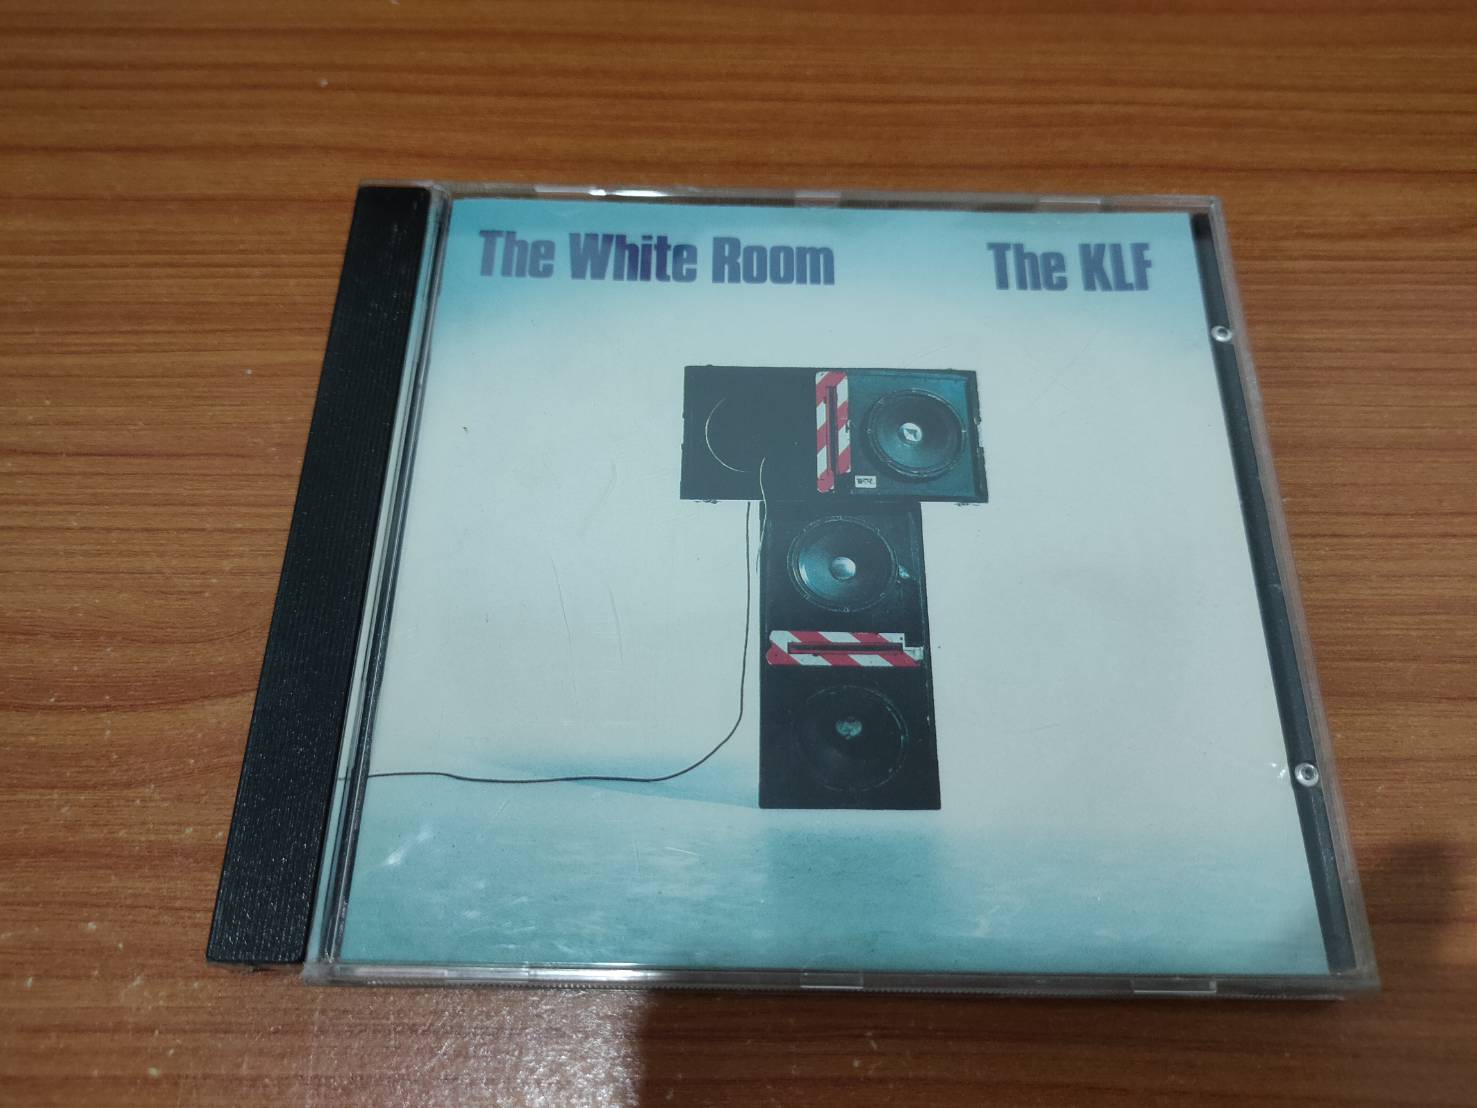 CD.MUSIC ซีดีเพลง เพลงสากล The White Room The KLF   ***โปรดอ่านรายละเอียดสินค้าก่อนทำการสั่งซื้อ***